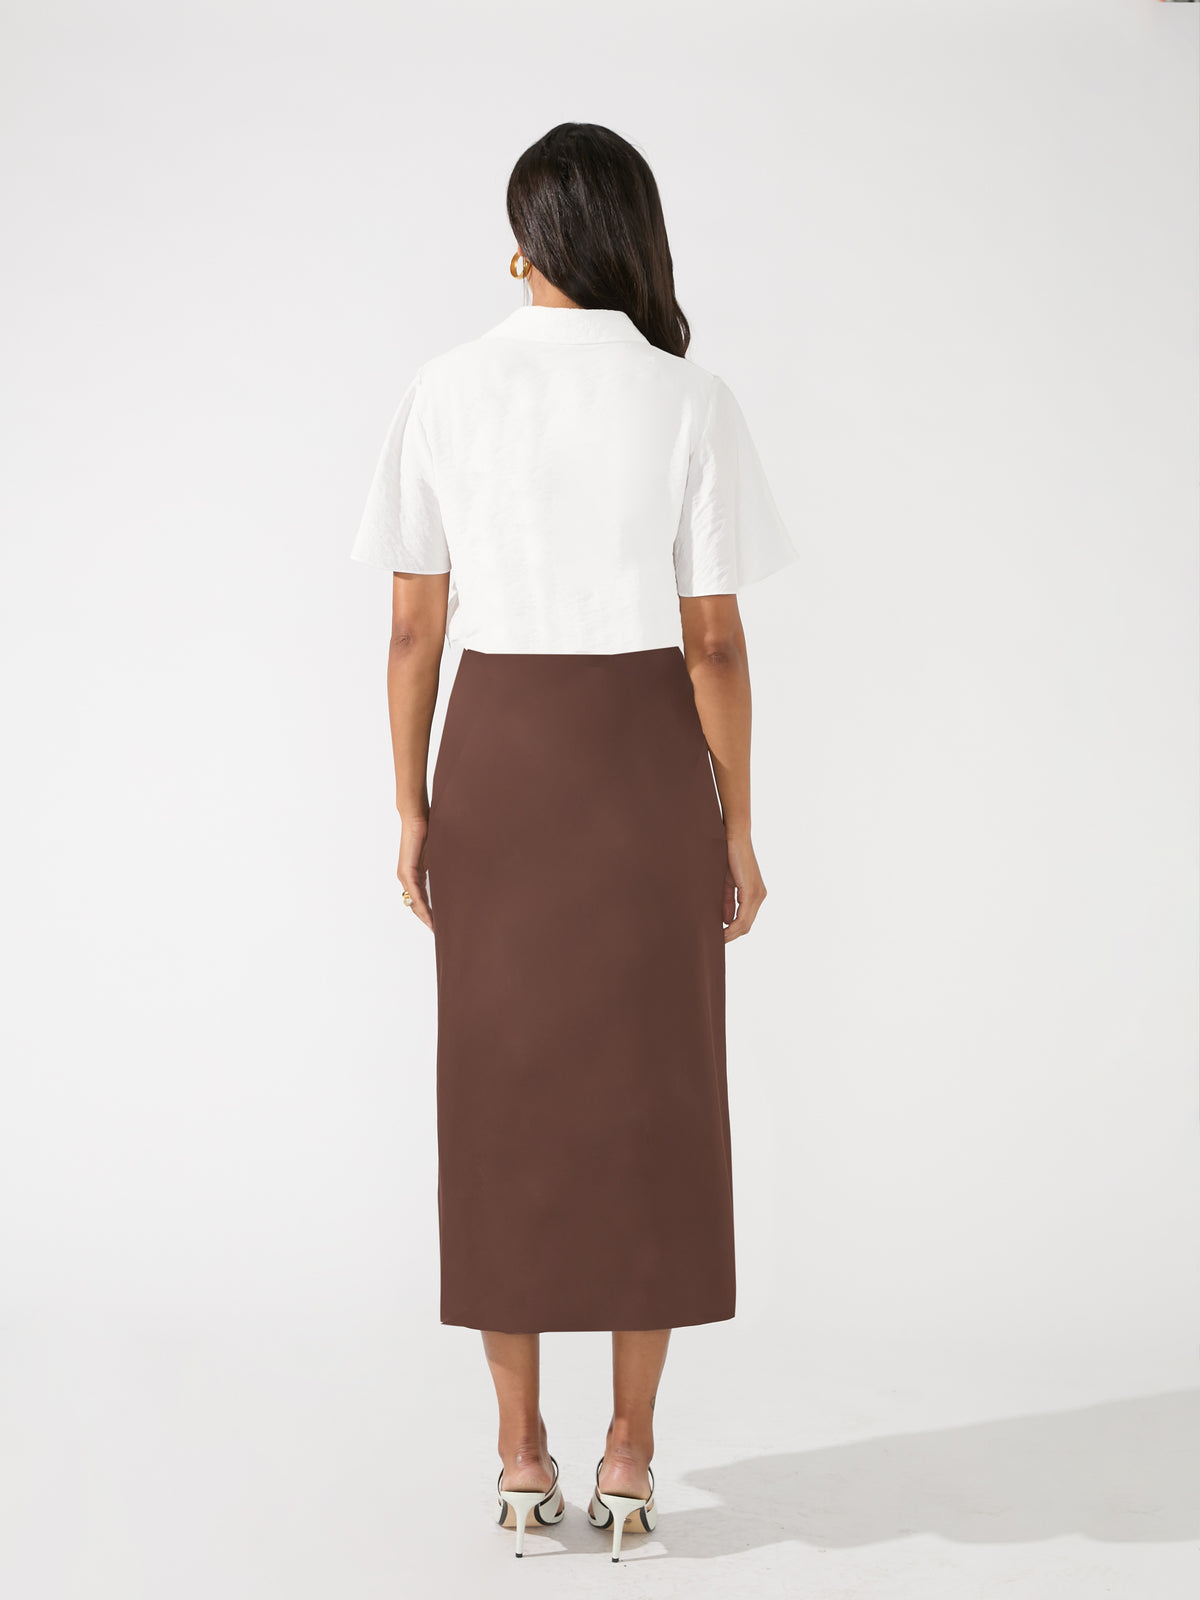 Petite Brown Satin Bias Skirt